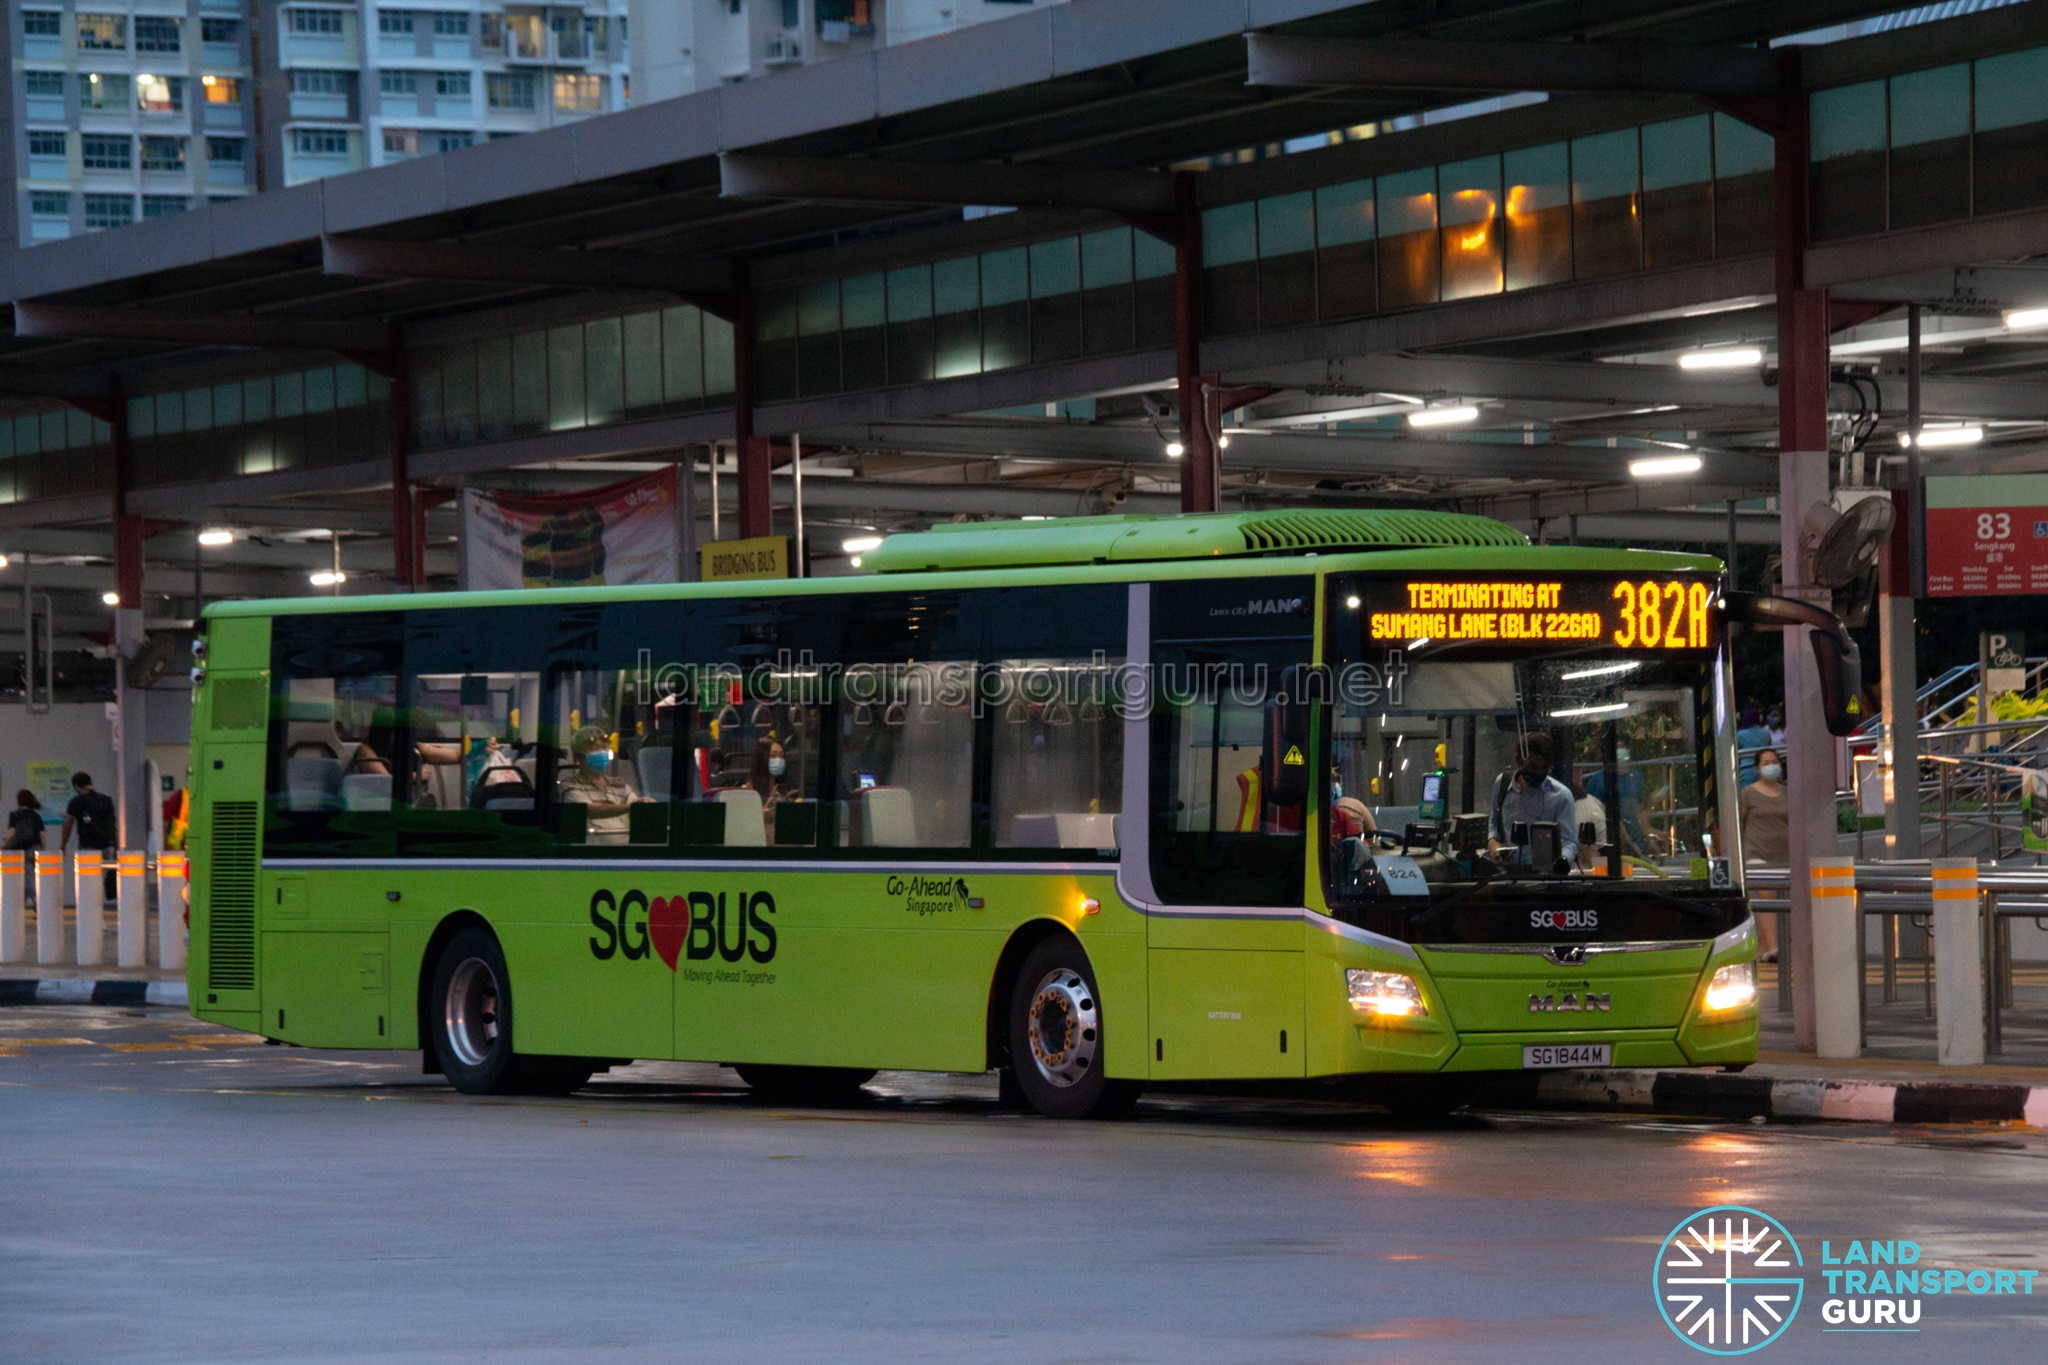 go-ahead-bus-service-382a-land-transport-guru